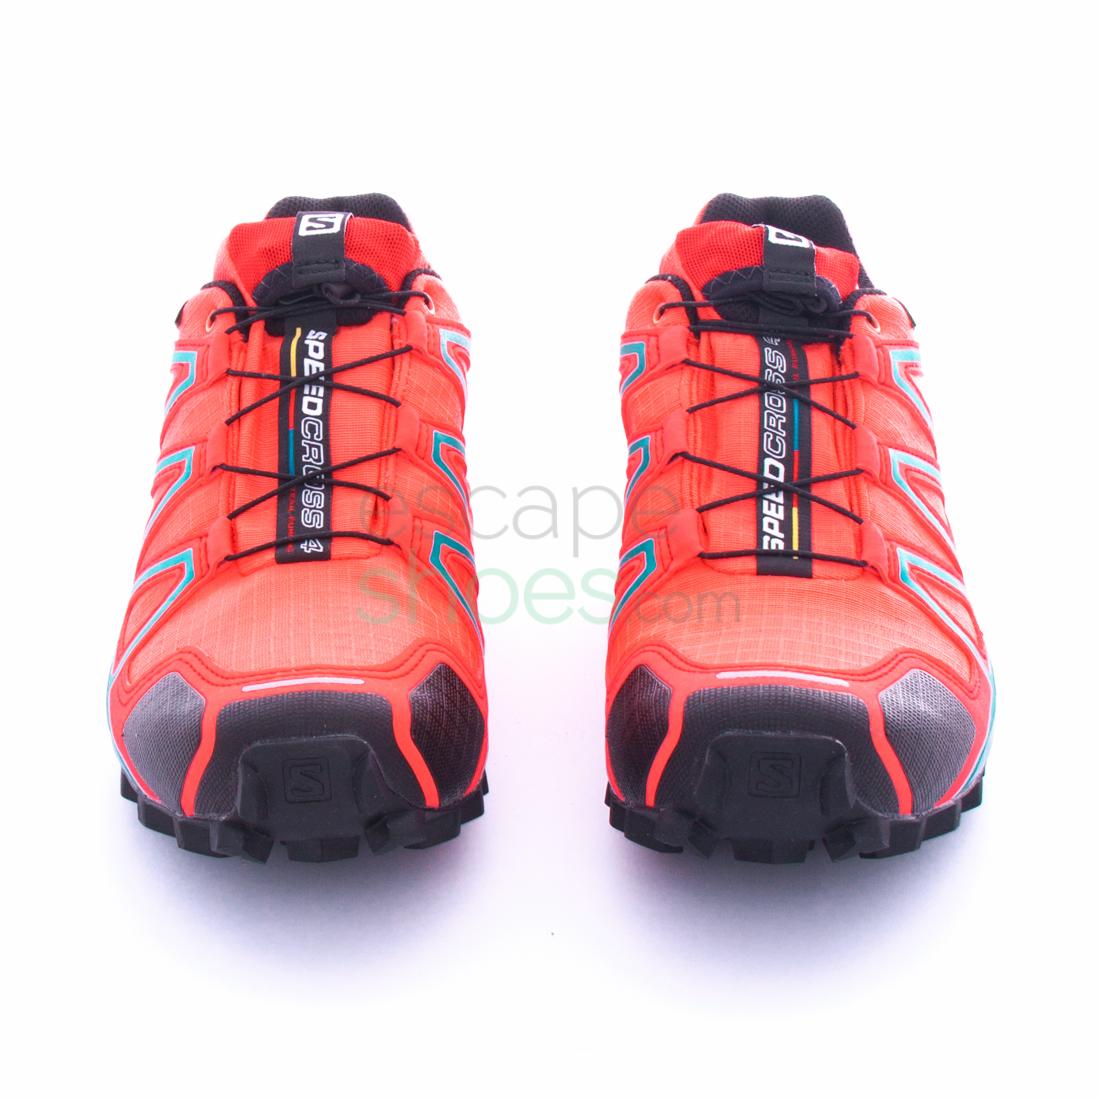 Sneakers SALOMON Speedcross Coral Punch Black Blue Jay 391836